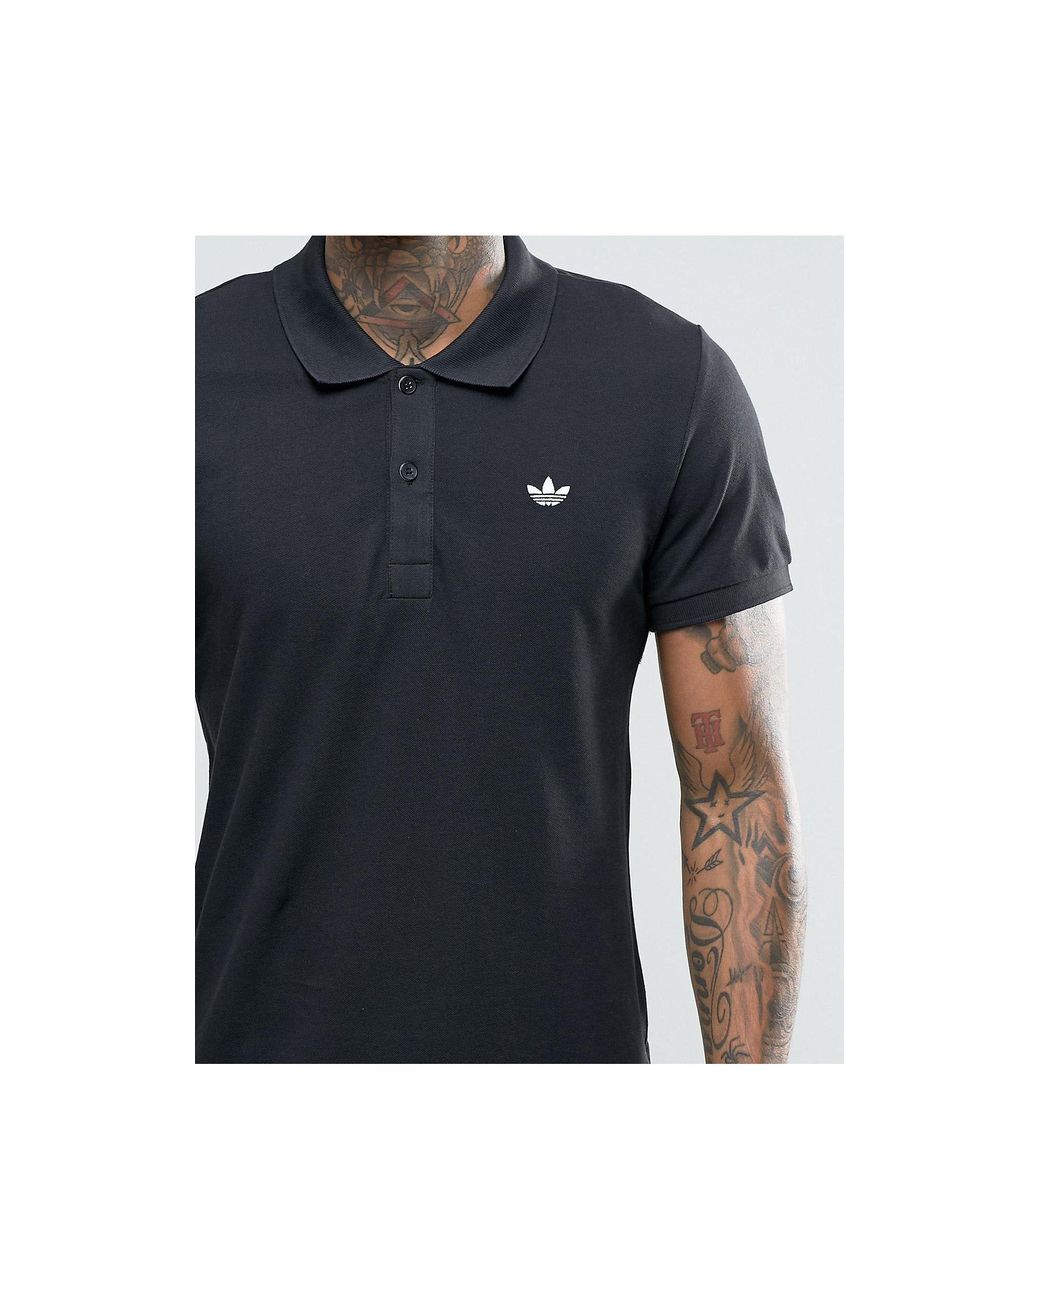 adidas Originals Trefoil Shirt Ab8298 in Black for Men | Lyst